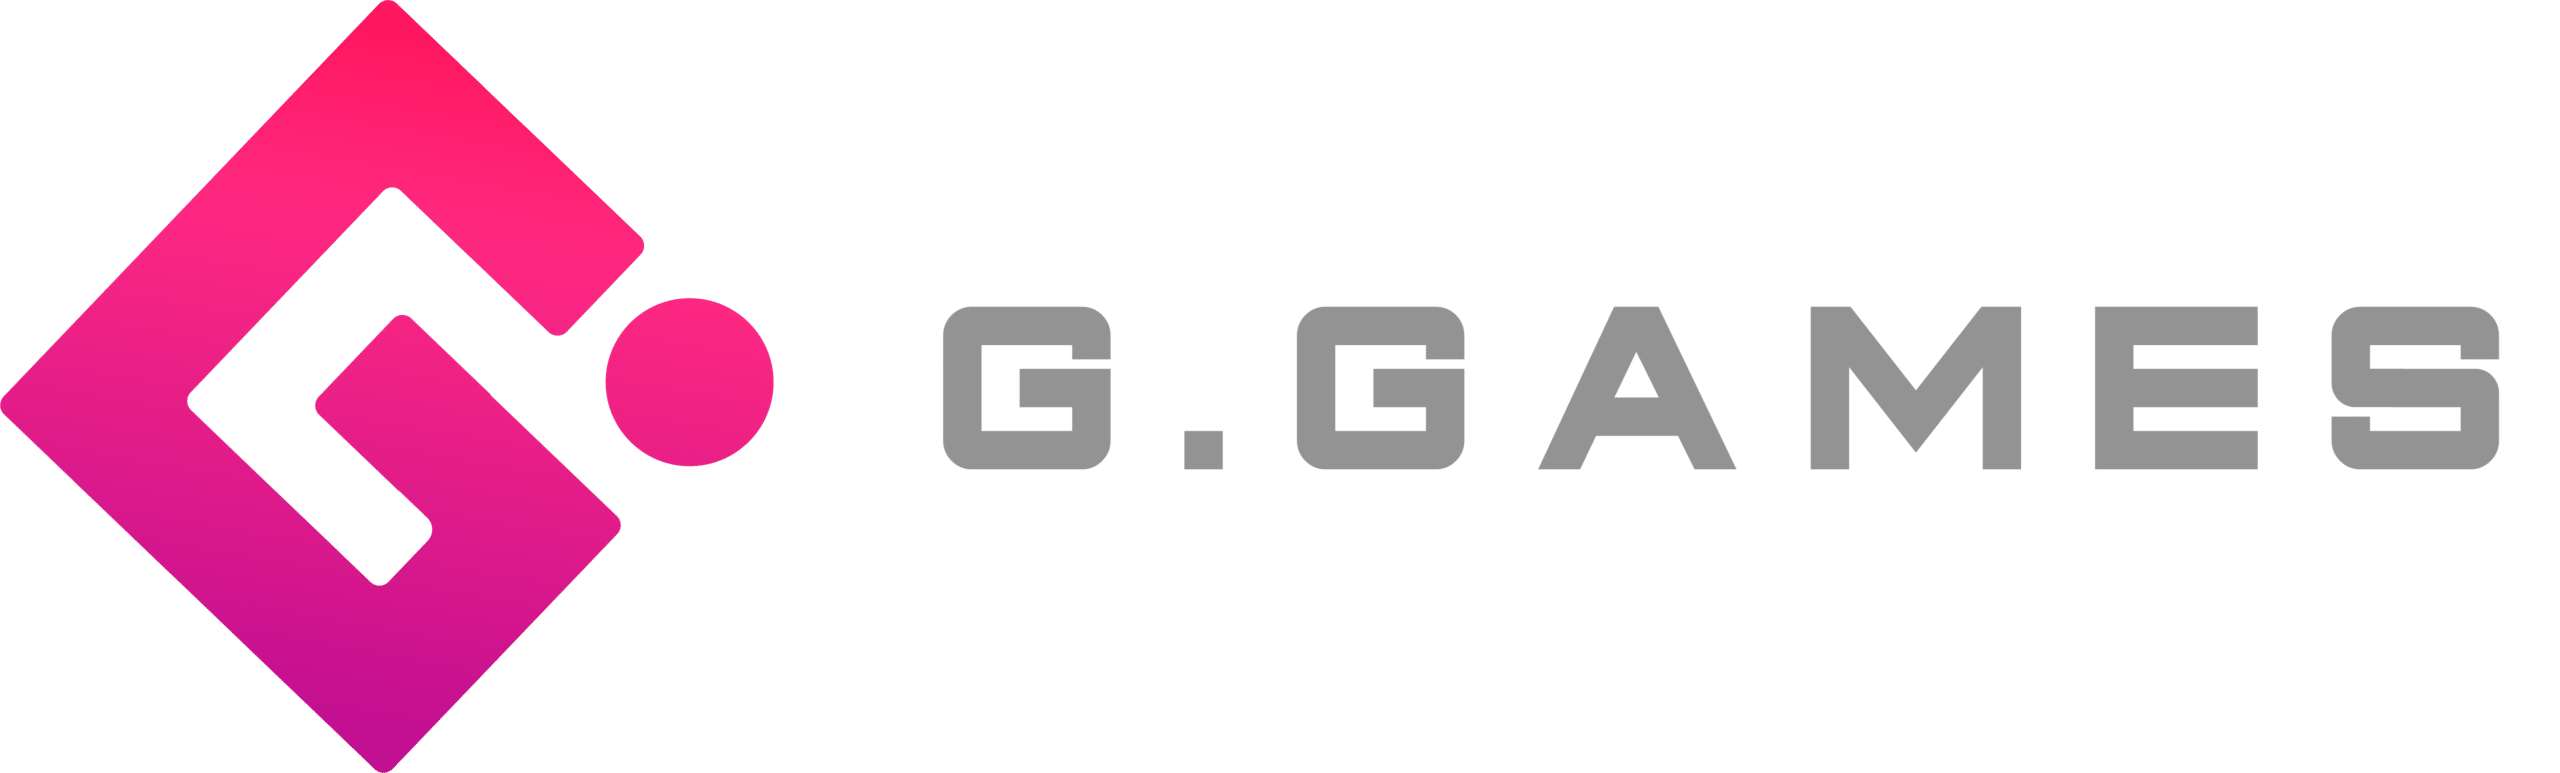 G.Games